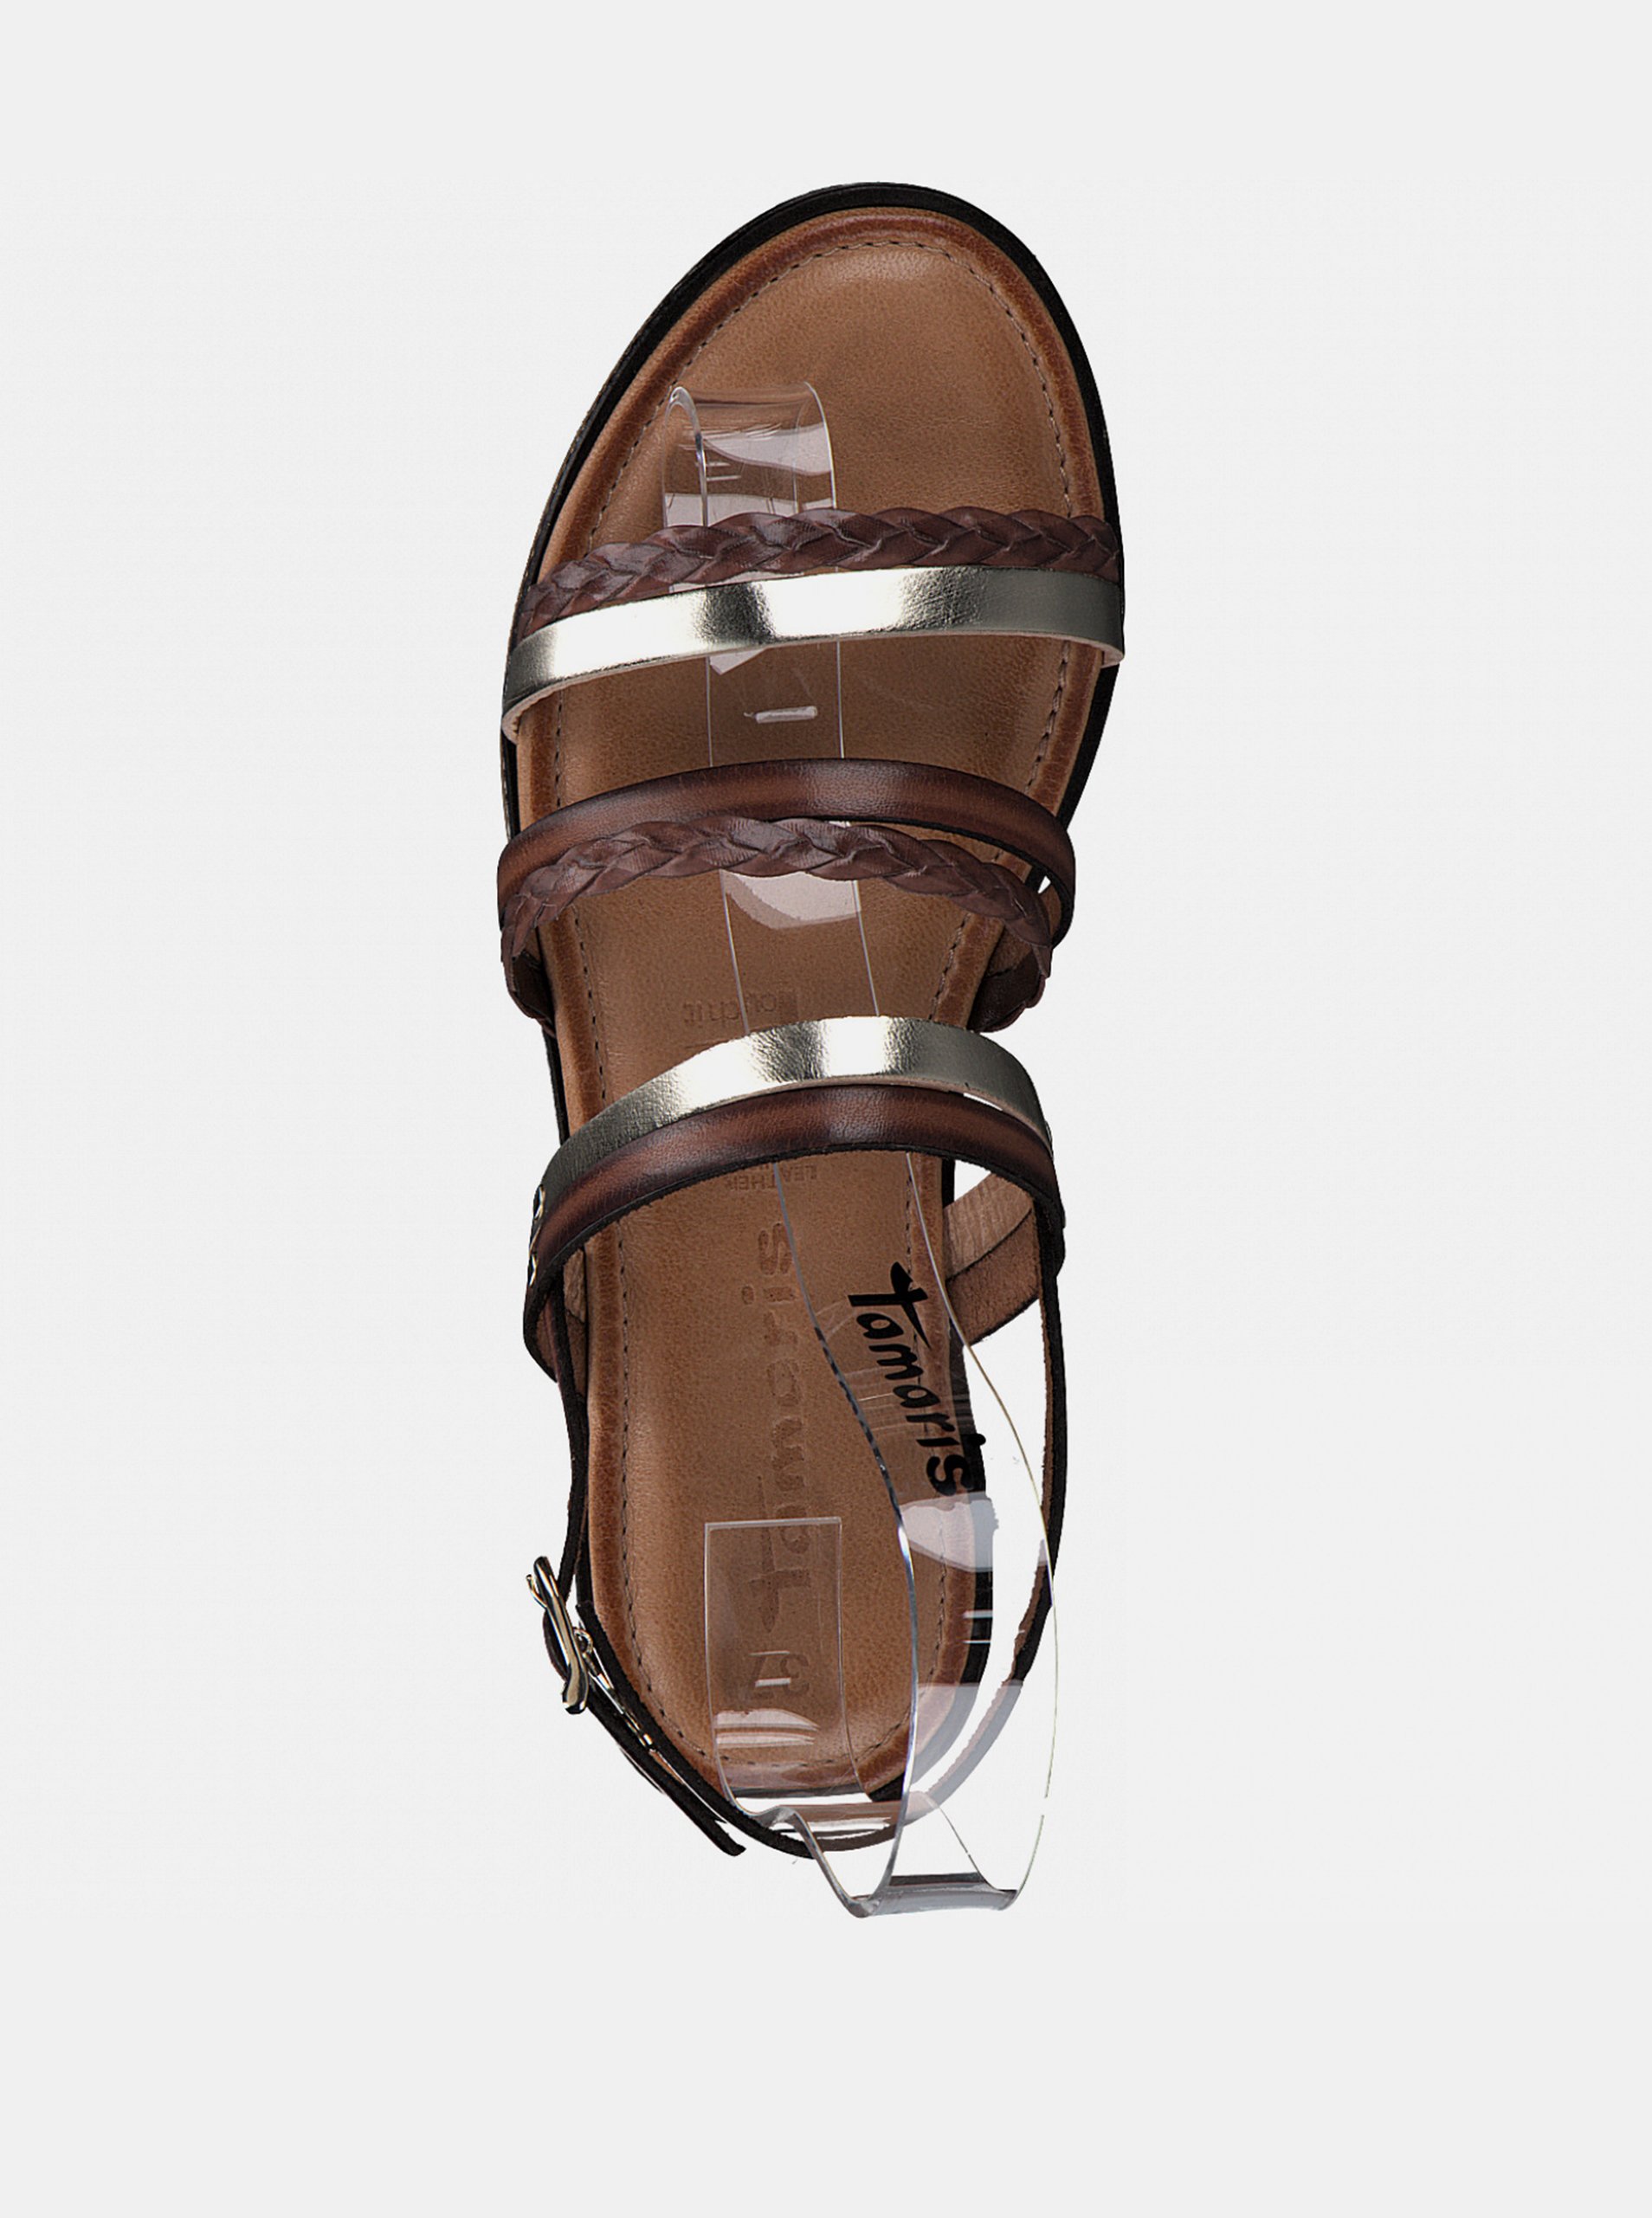 Hnedé kožené sandále Tamaris.